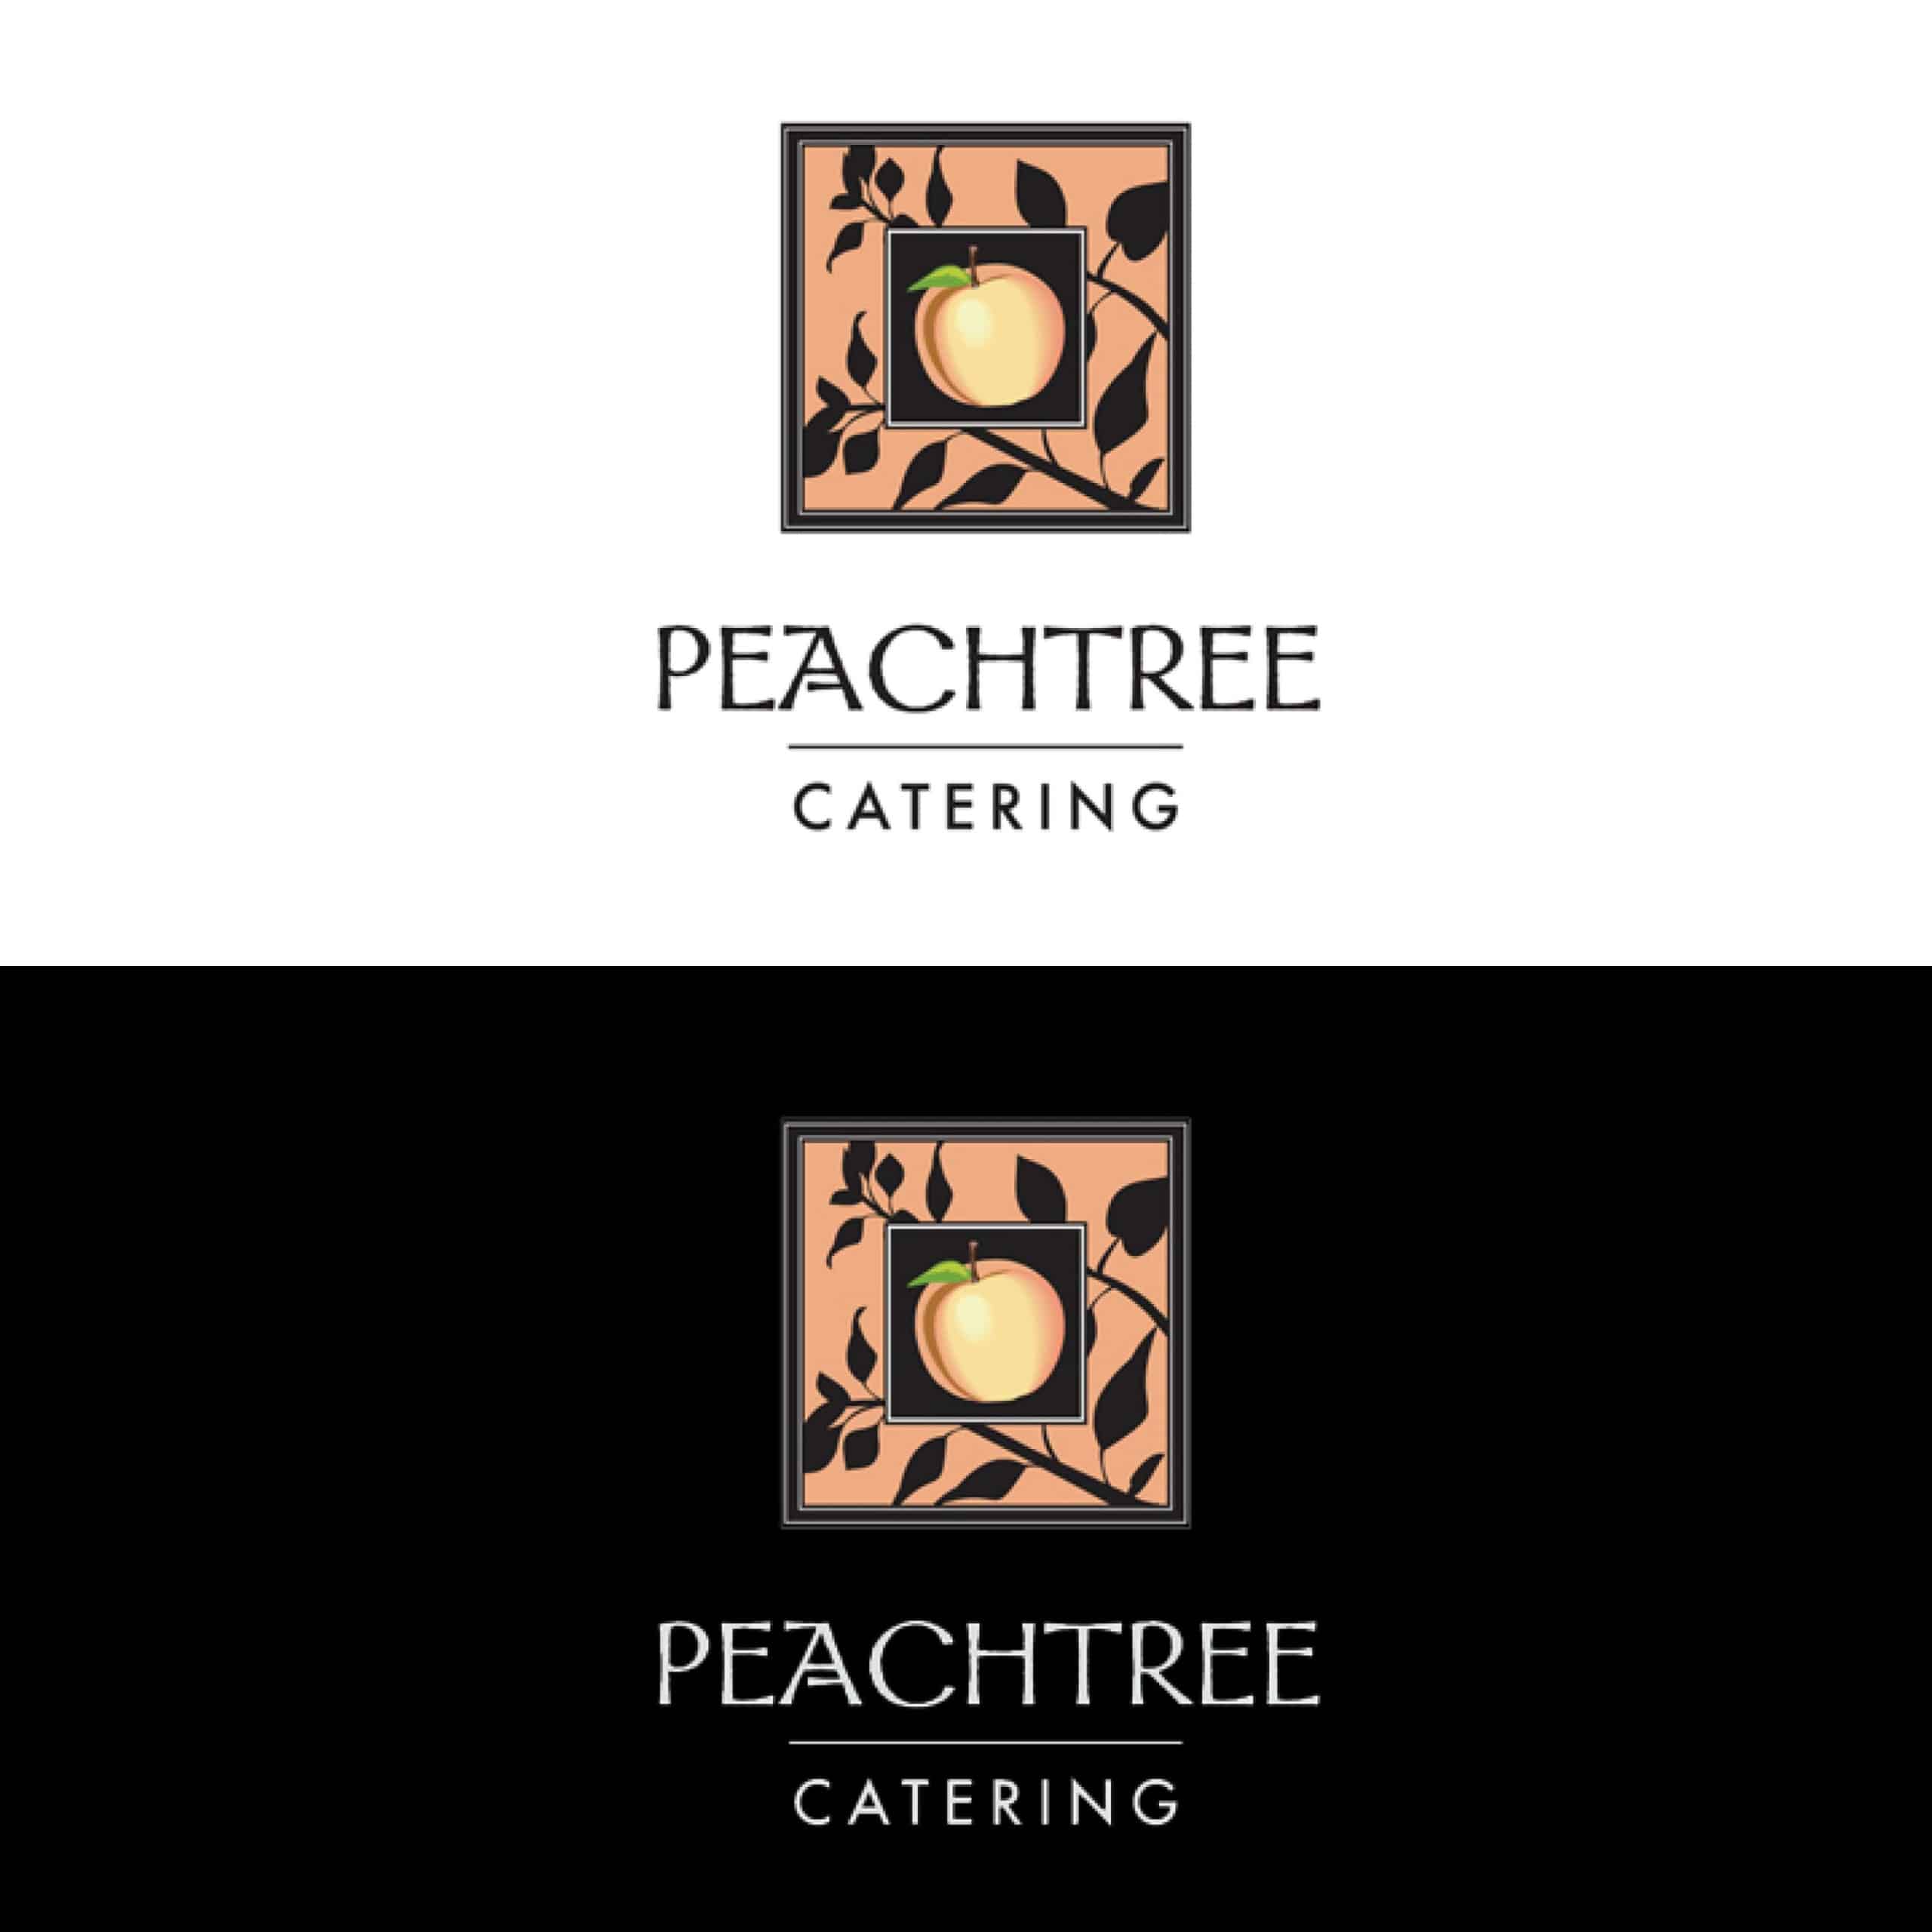 Peachtree Catering - Branding & Marketing